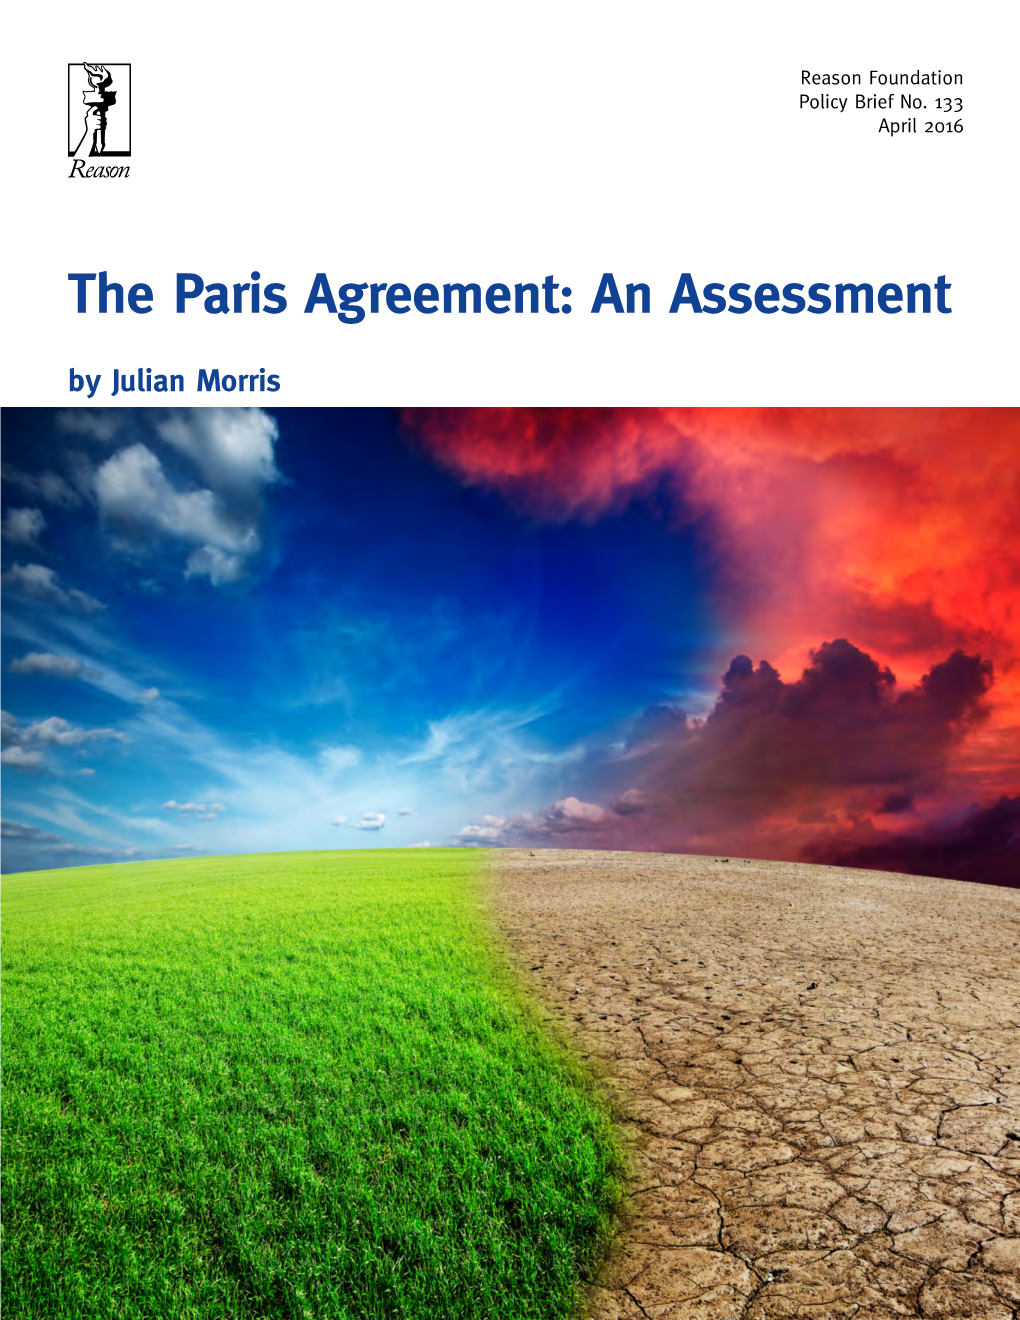 The Paris Agreement: an Assessment by Julian Morris Reason Foundation